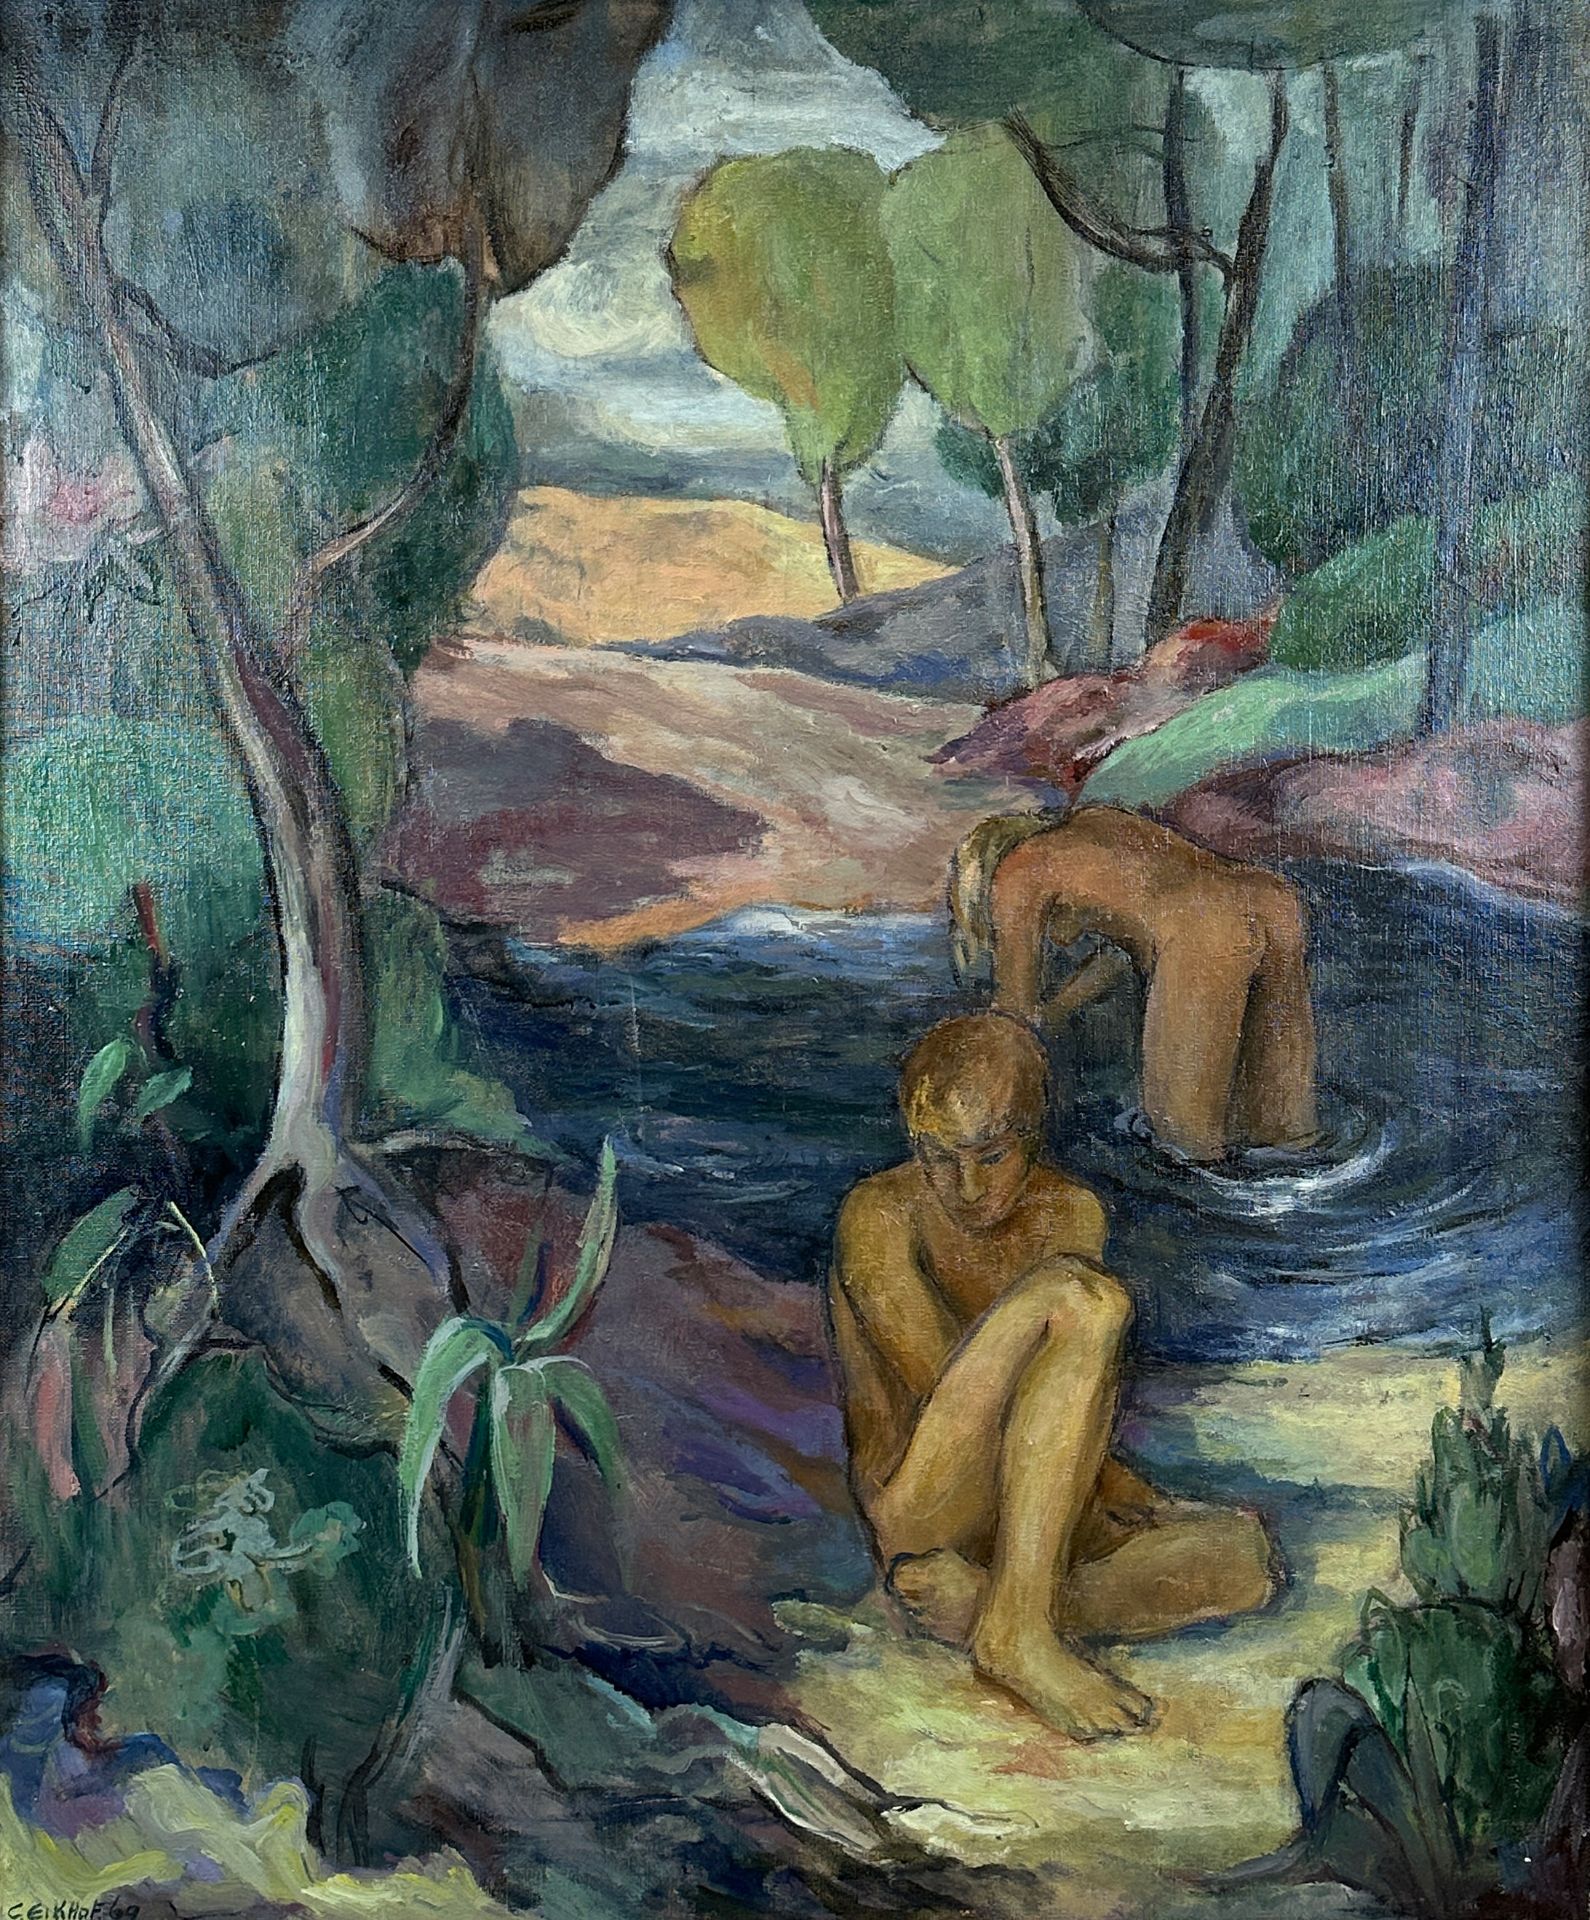 Carolus Barromeus VAN DEN EIKHOF (1931). Children by a body of water in the forest. Dated 1969.